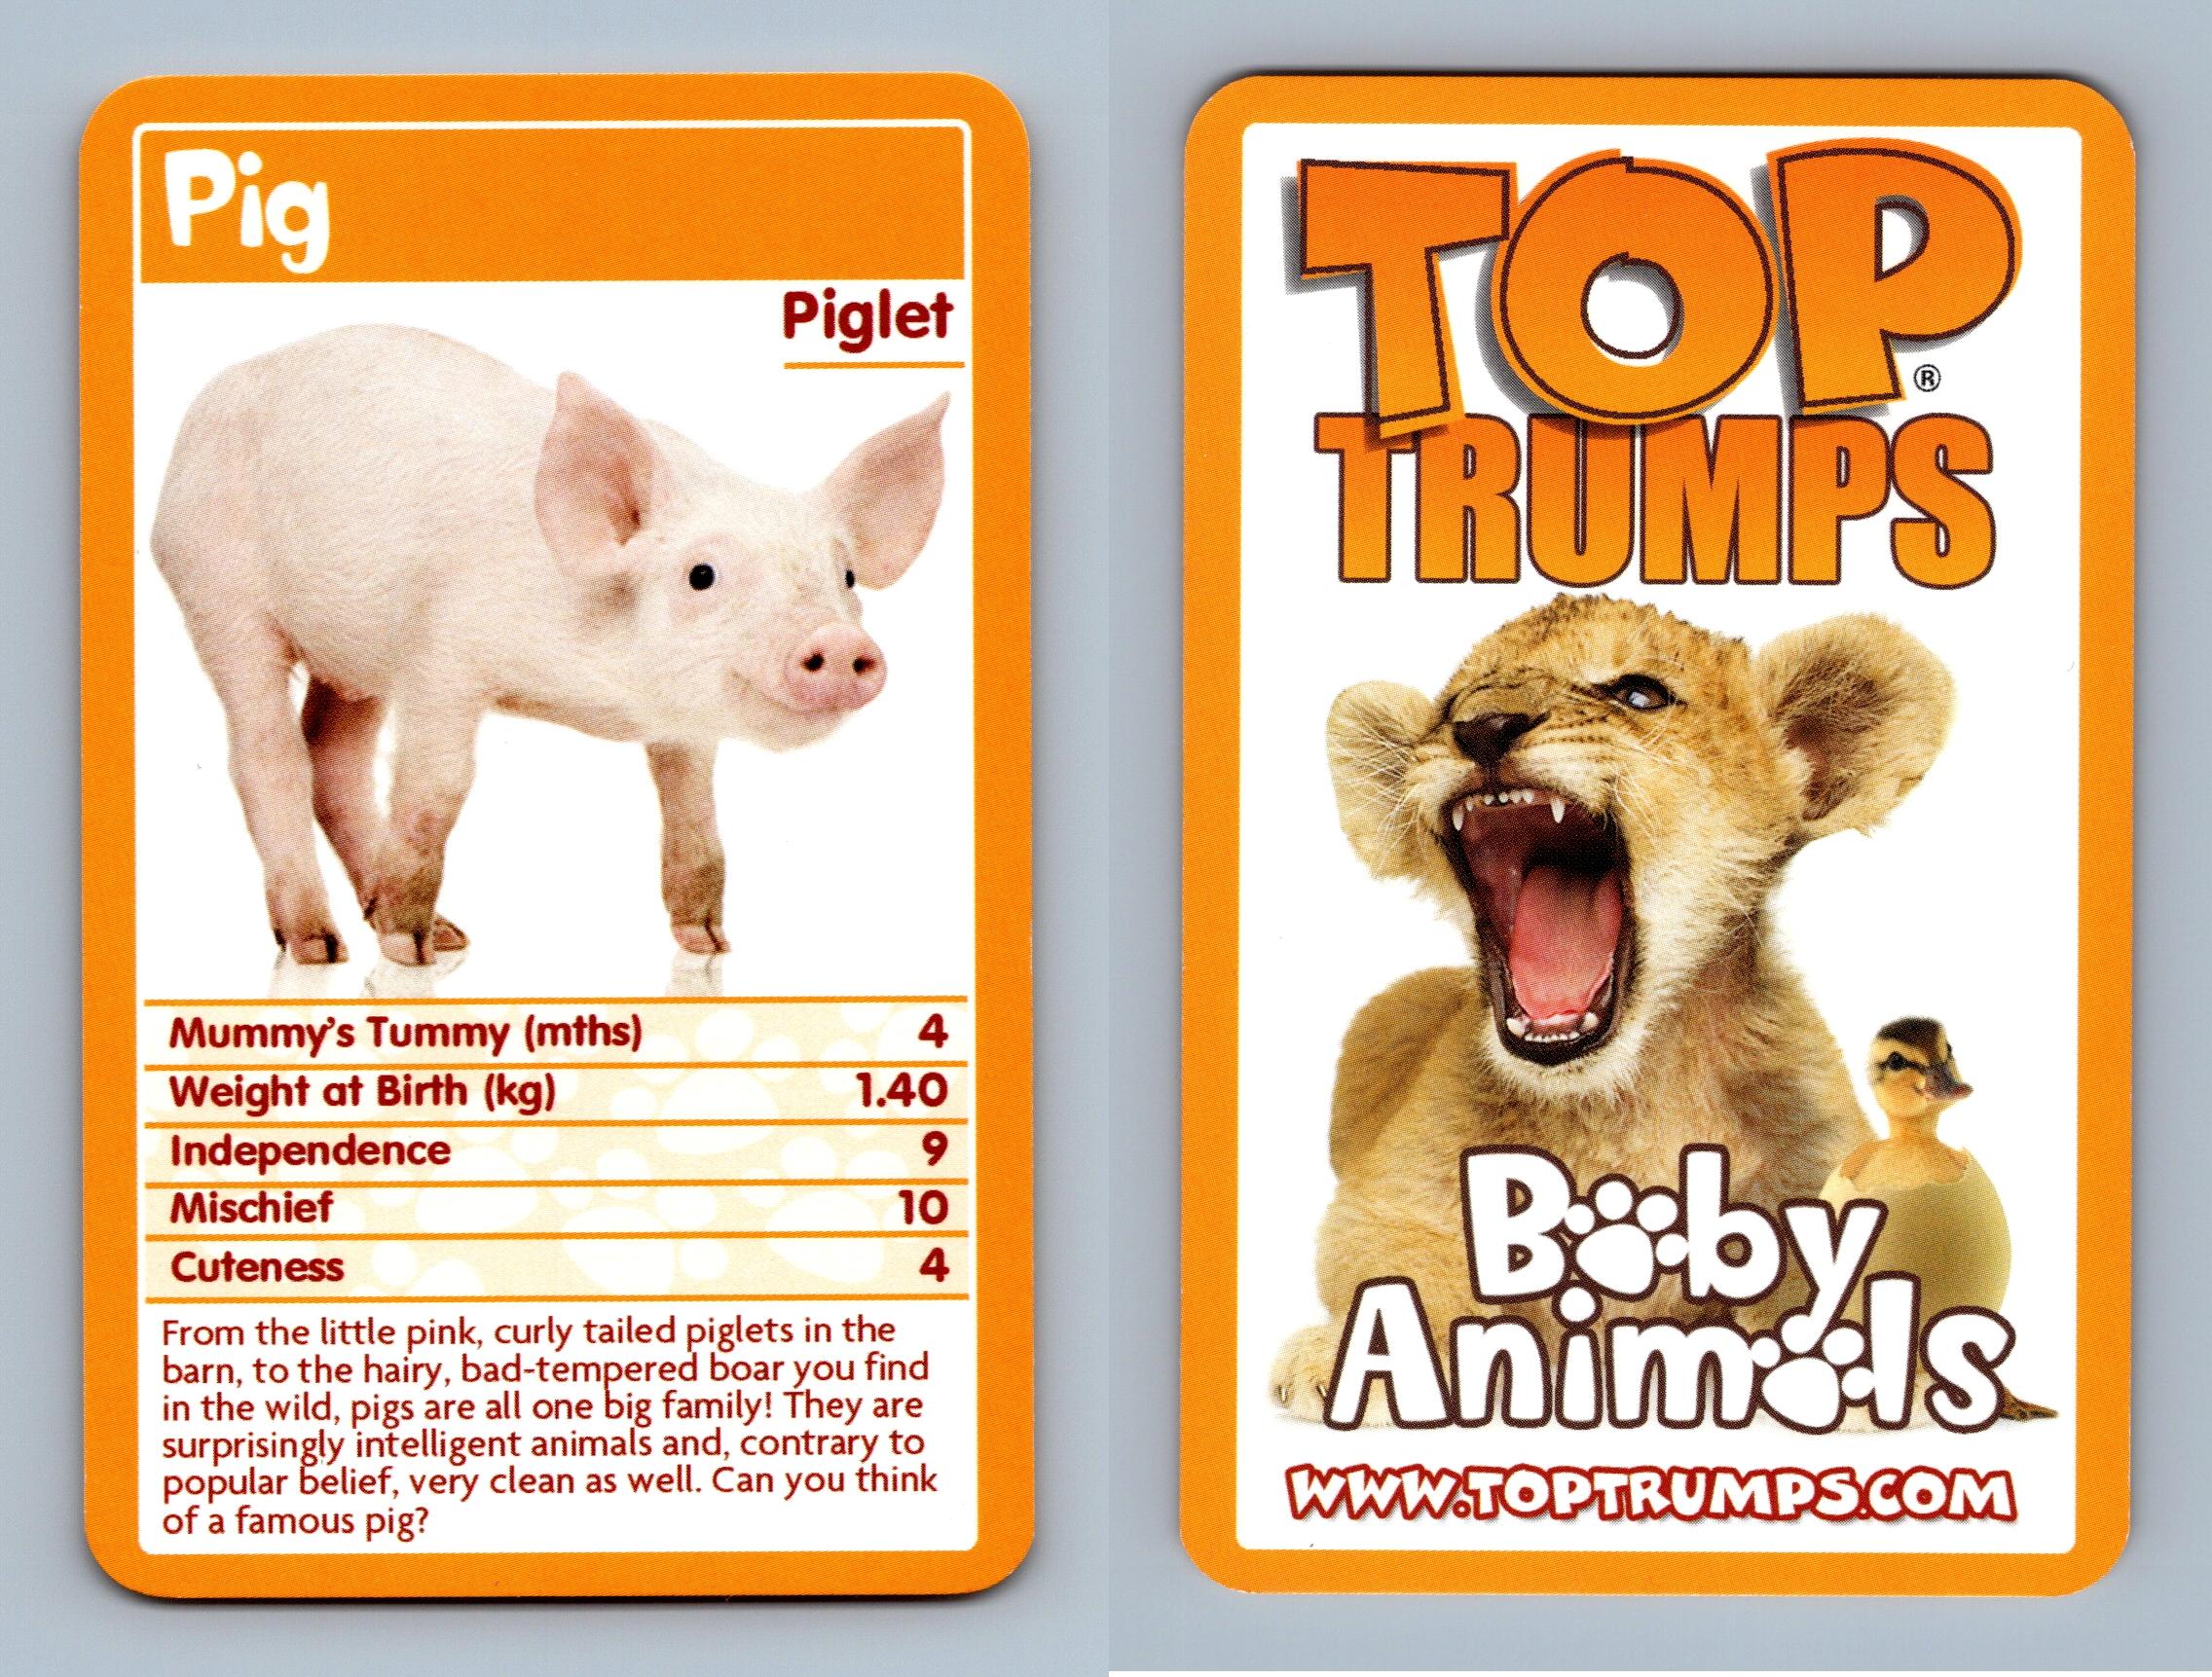 Pig / Piglet - Baby Animals 2009 Top Trumps Card - Photo 1 sur 1